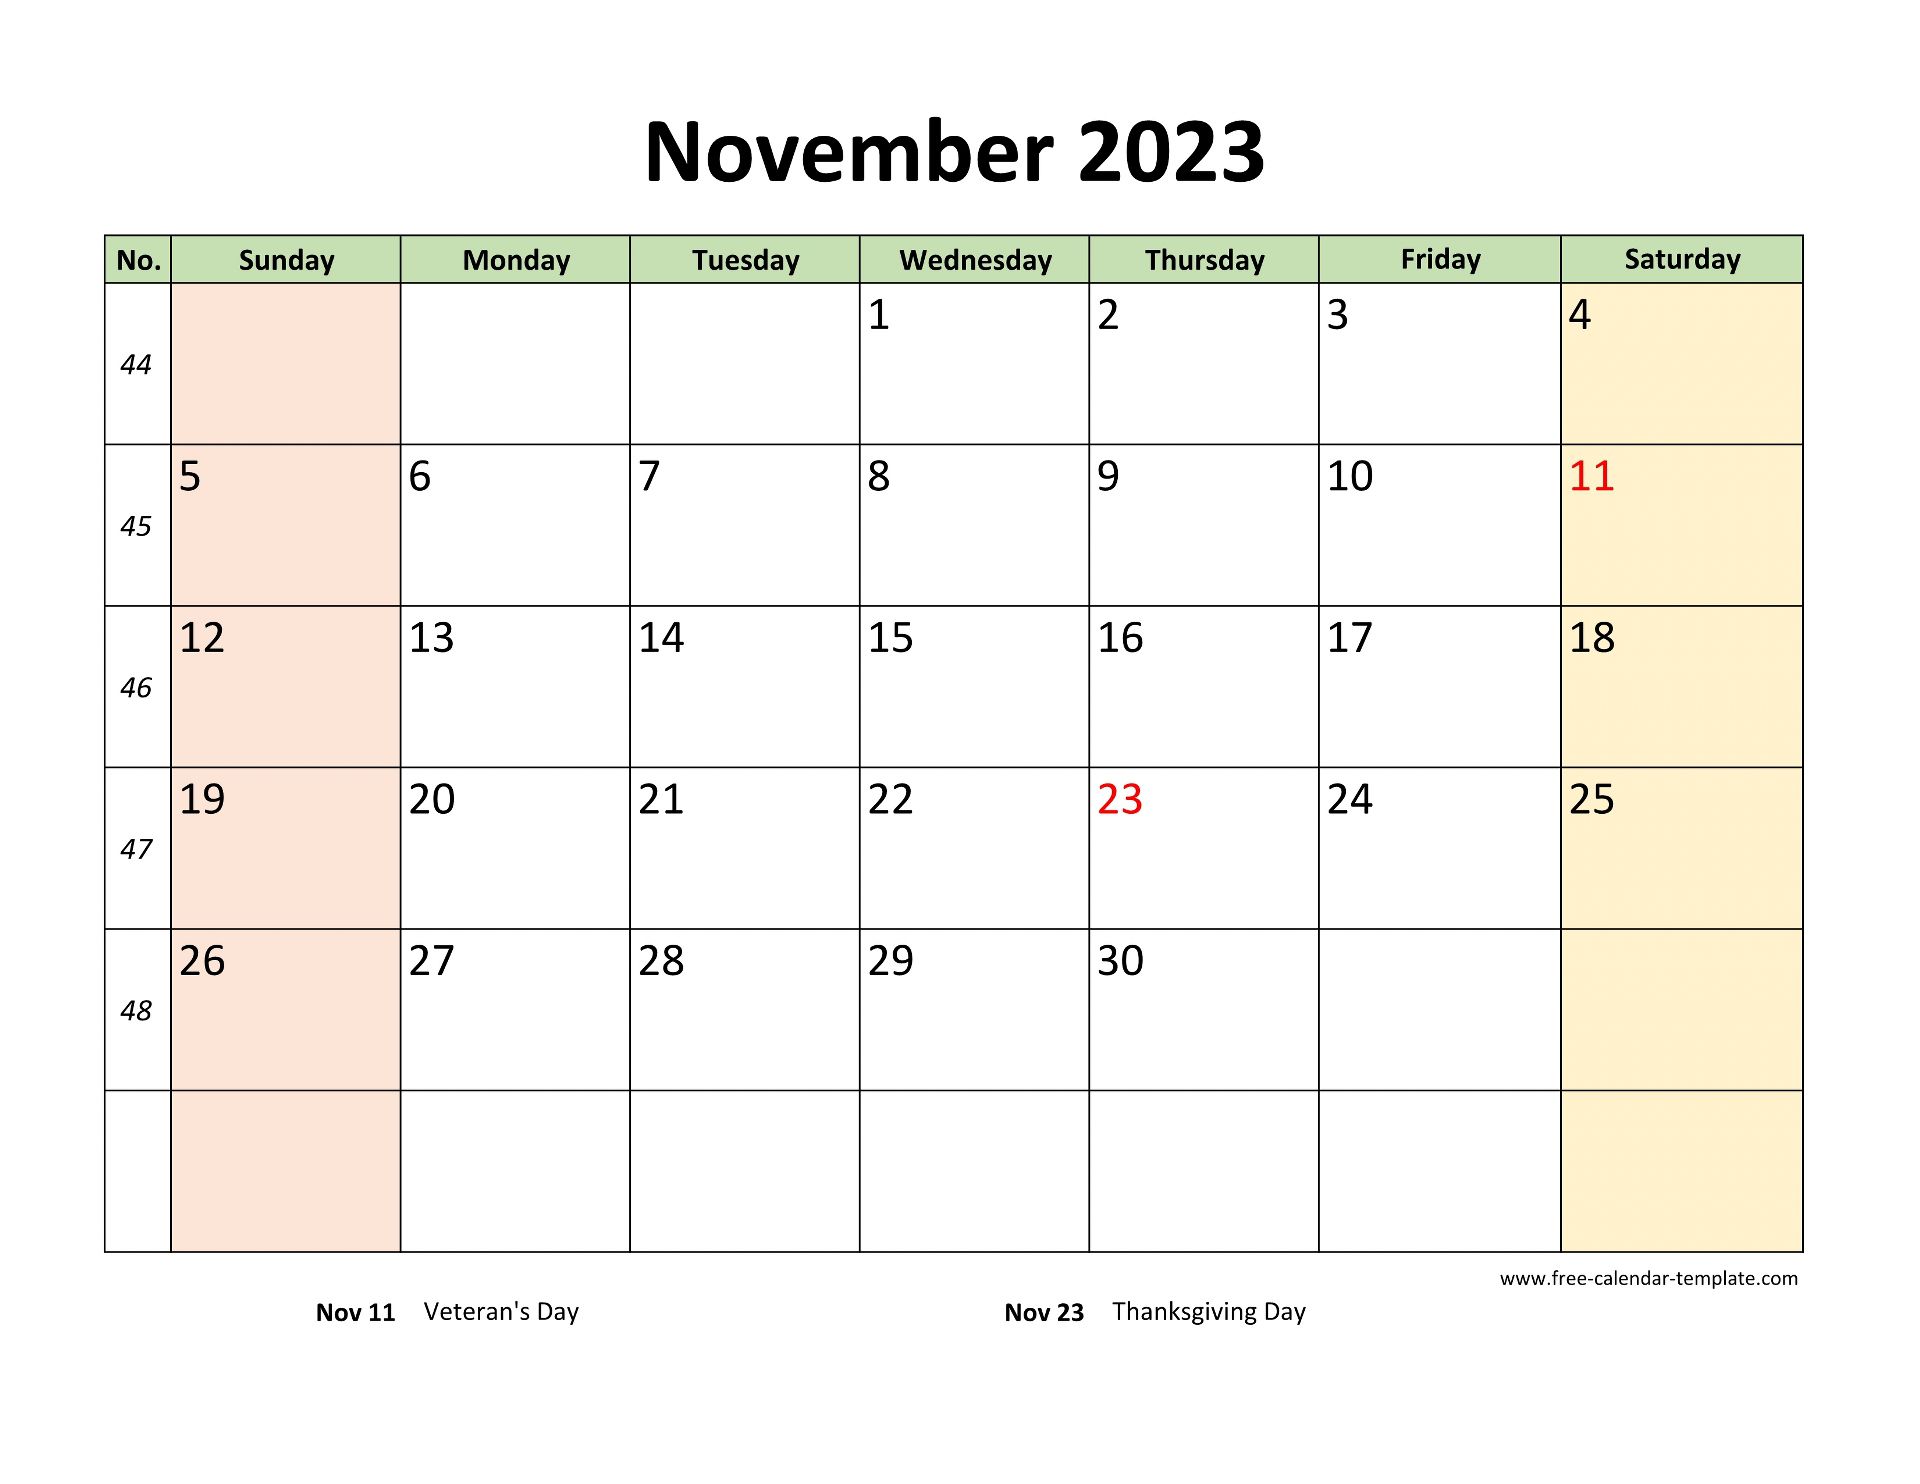 November 2023 Calendar Free Printable Calendar November 2023 Calendar 